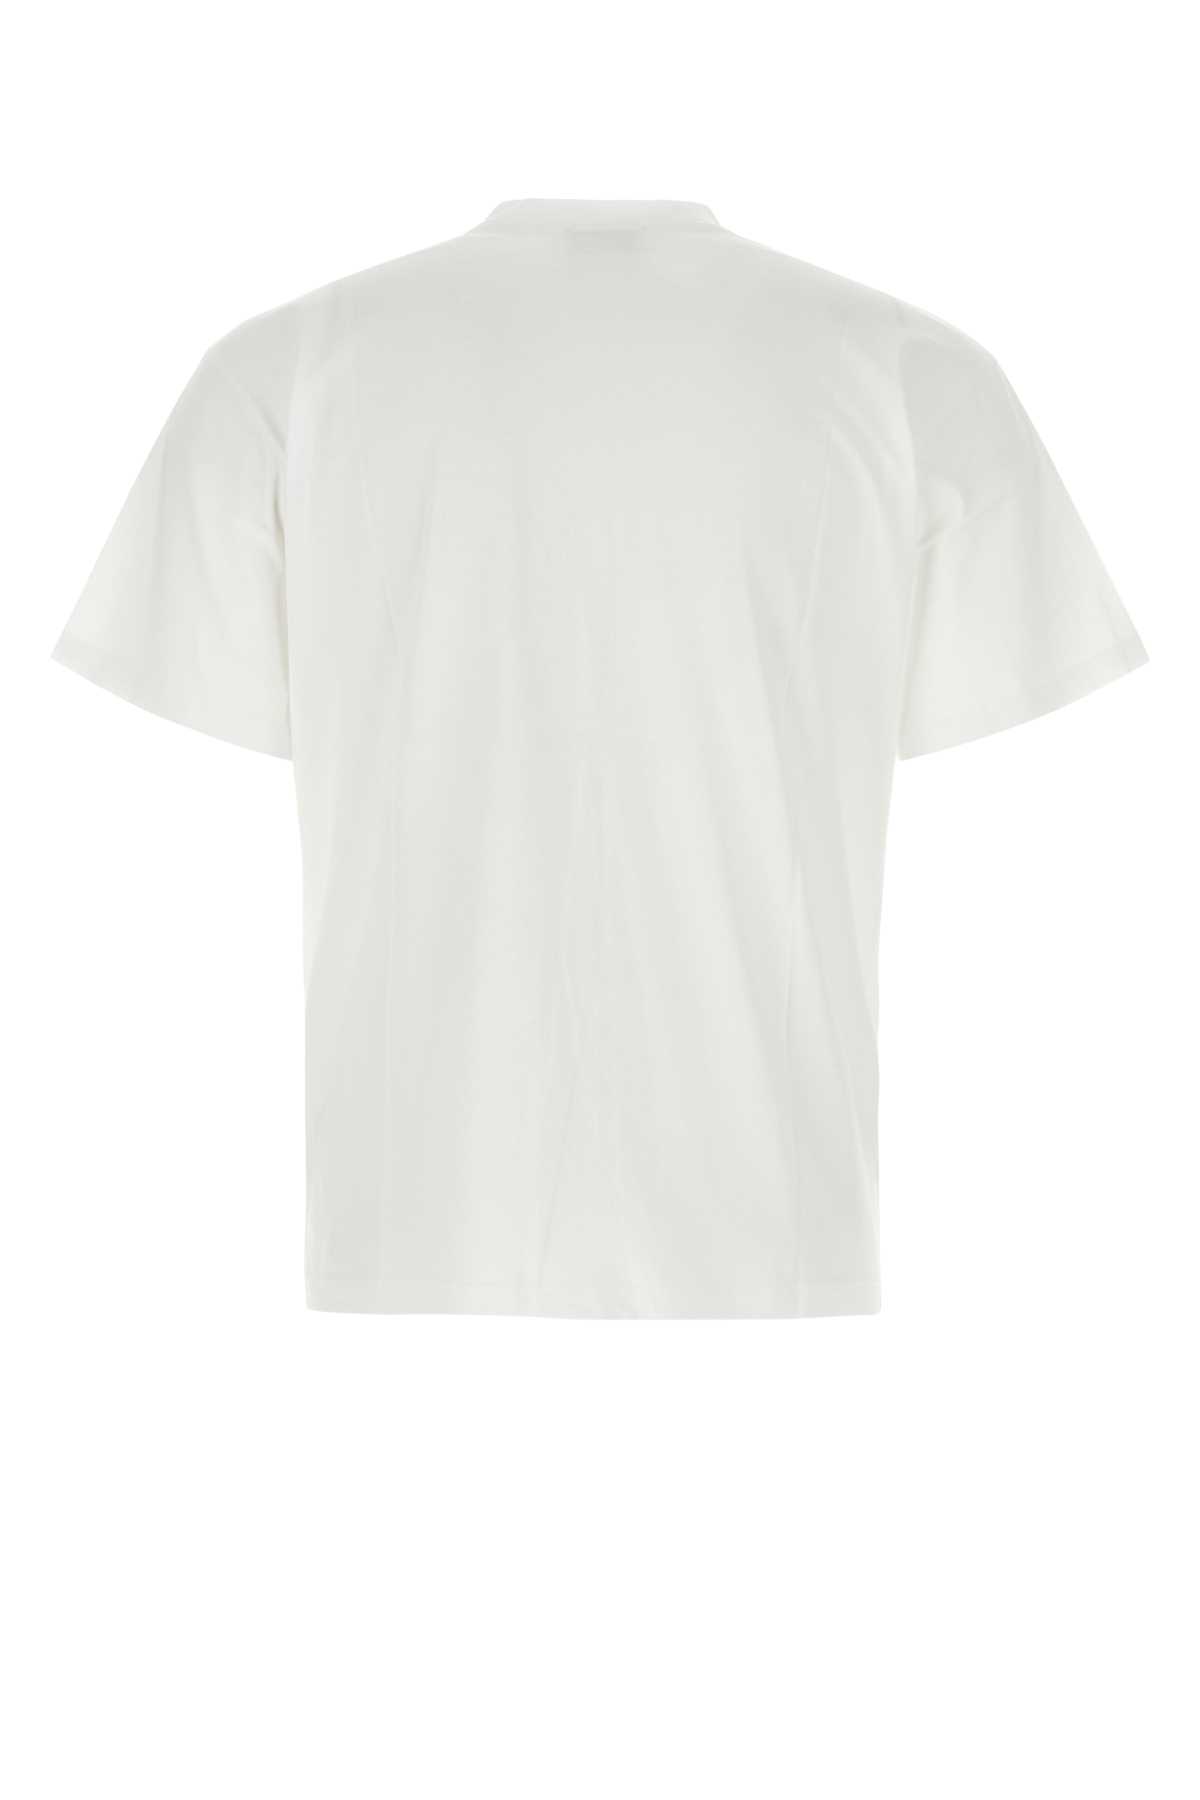 Aries White Cotton Temple T-shirt